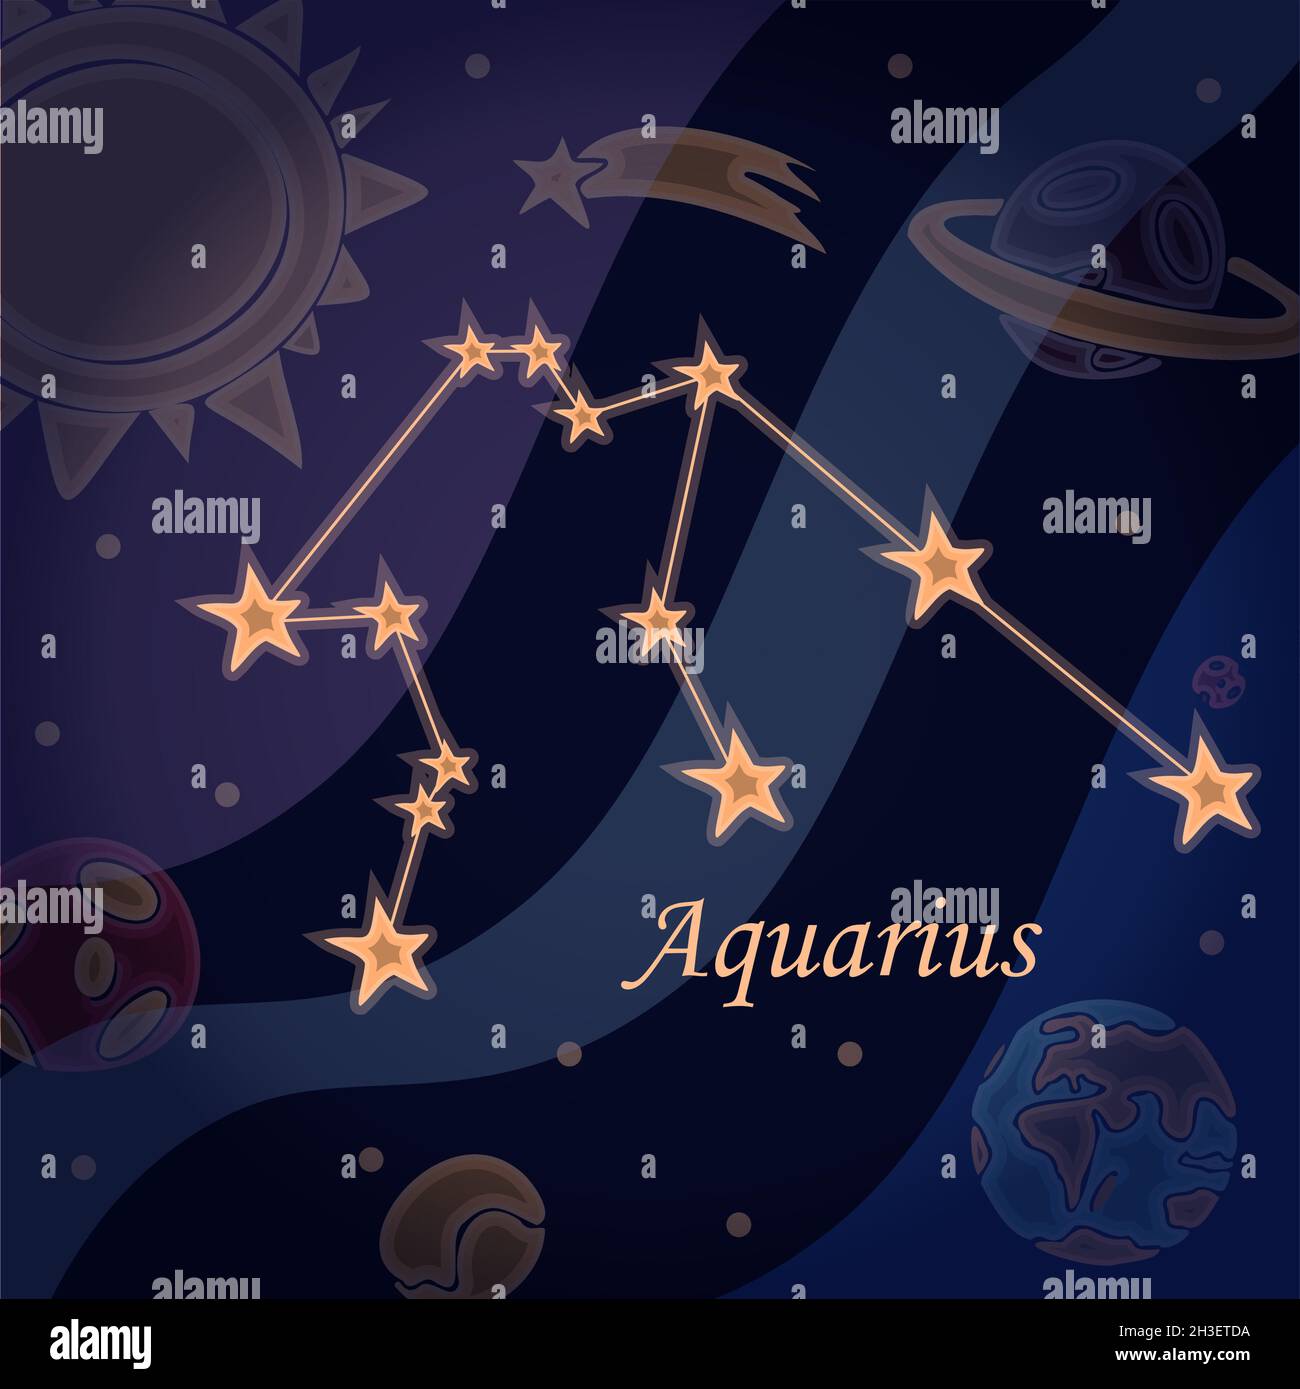 stars in solar system zodiac sighns